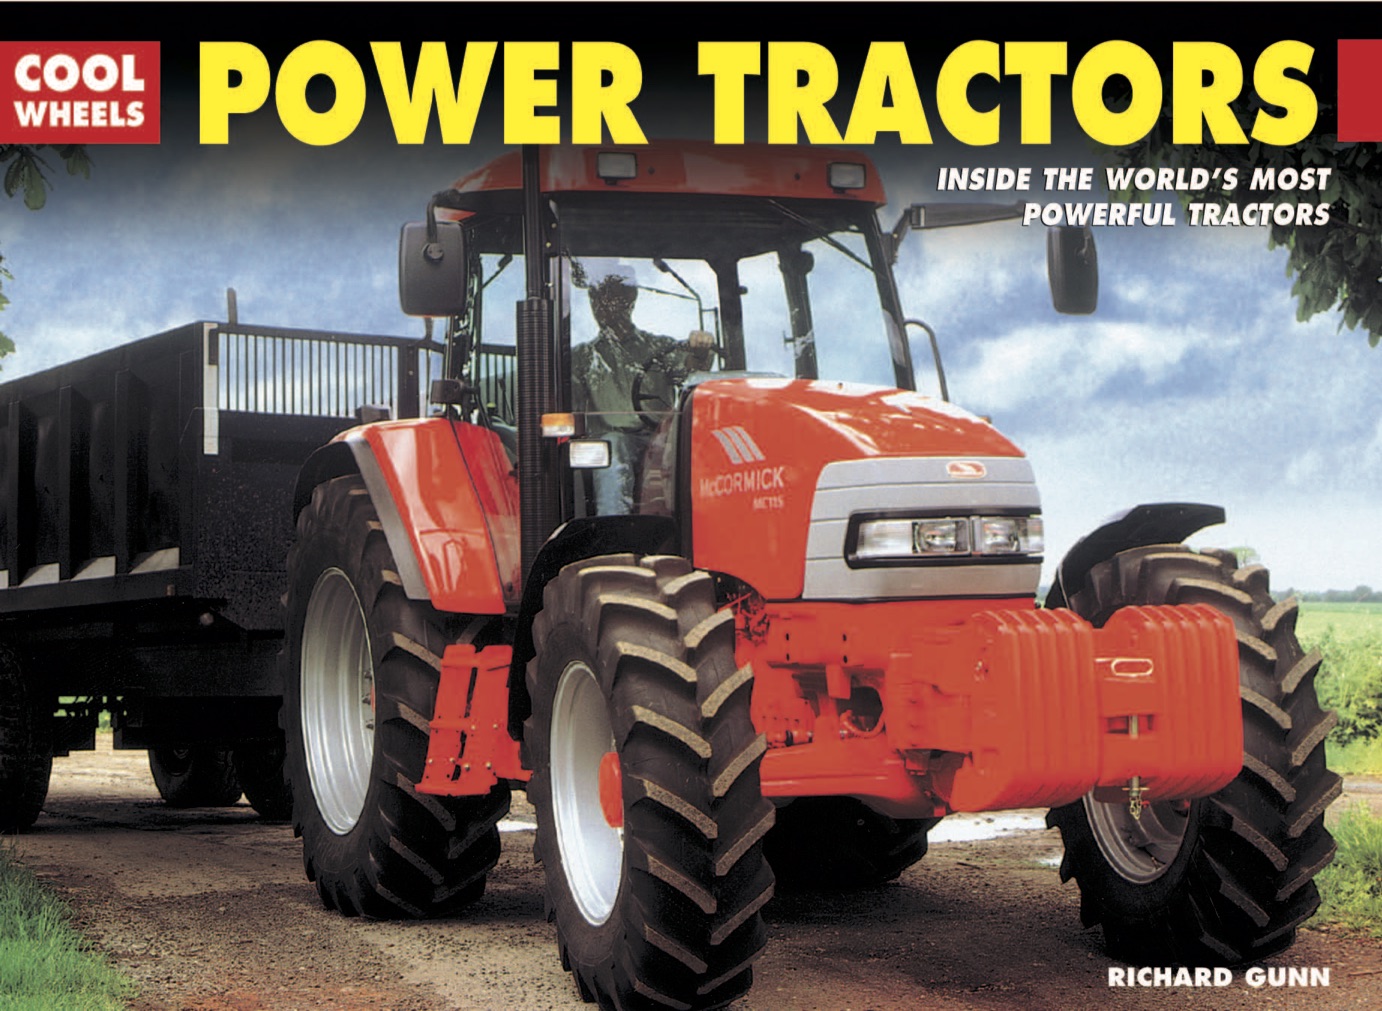 Cool Wheels: Power Tractors